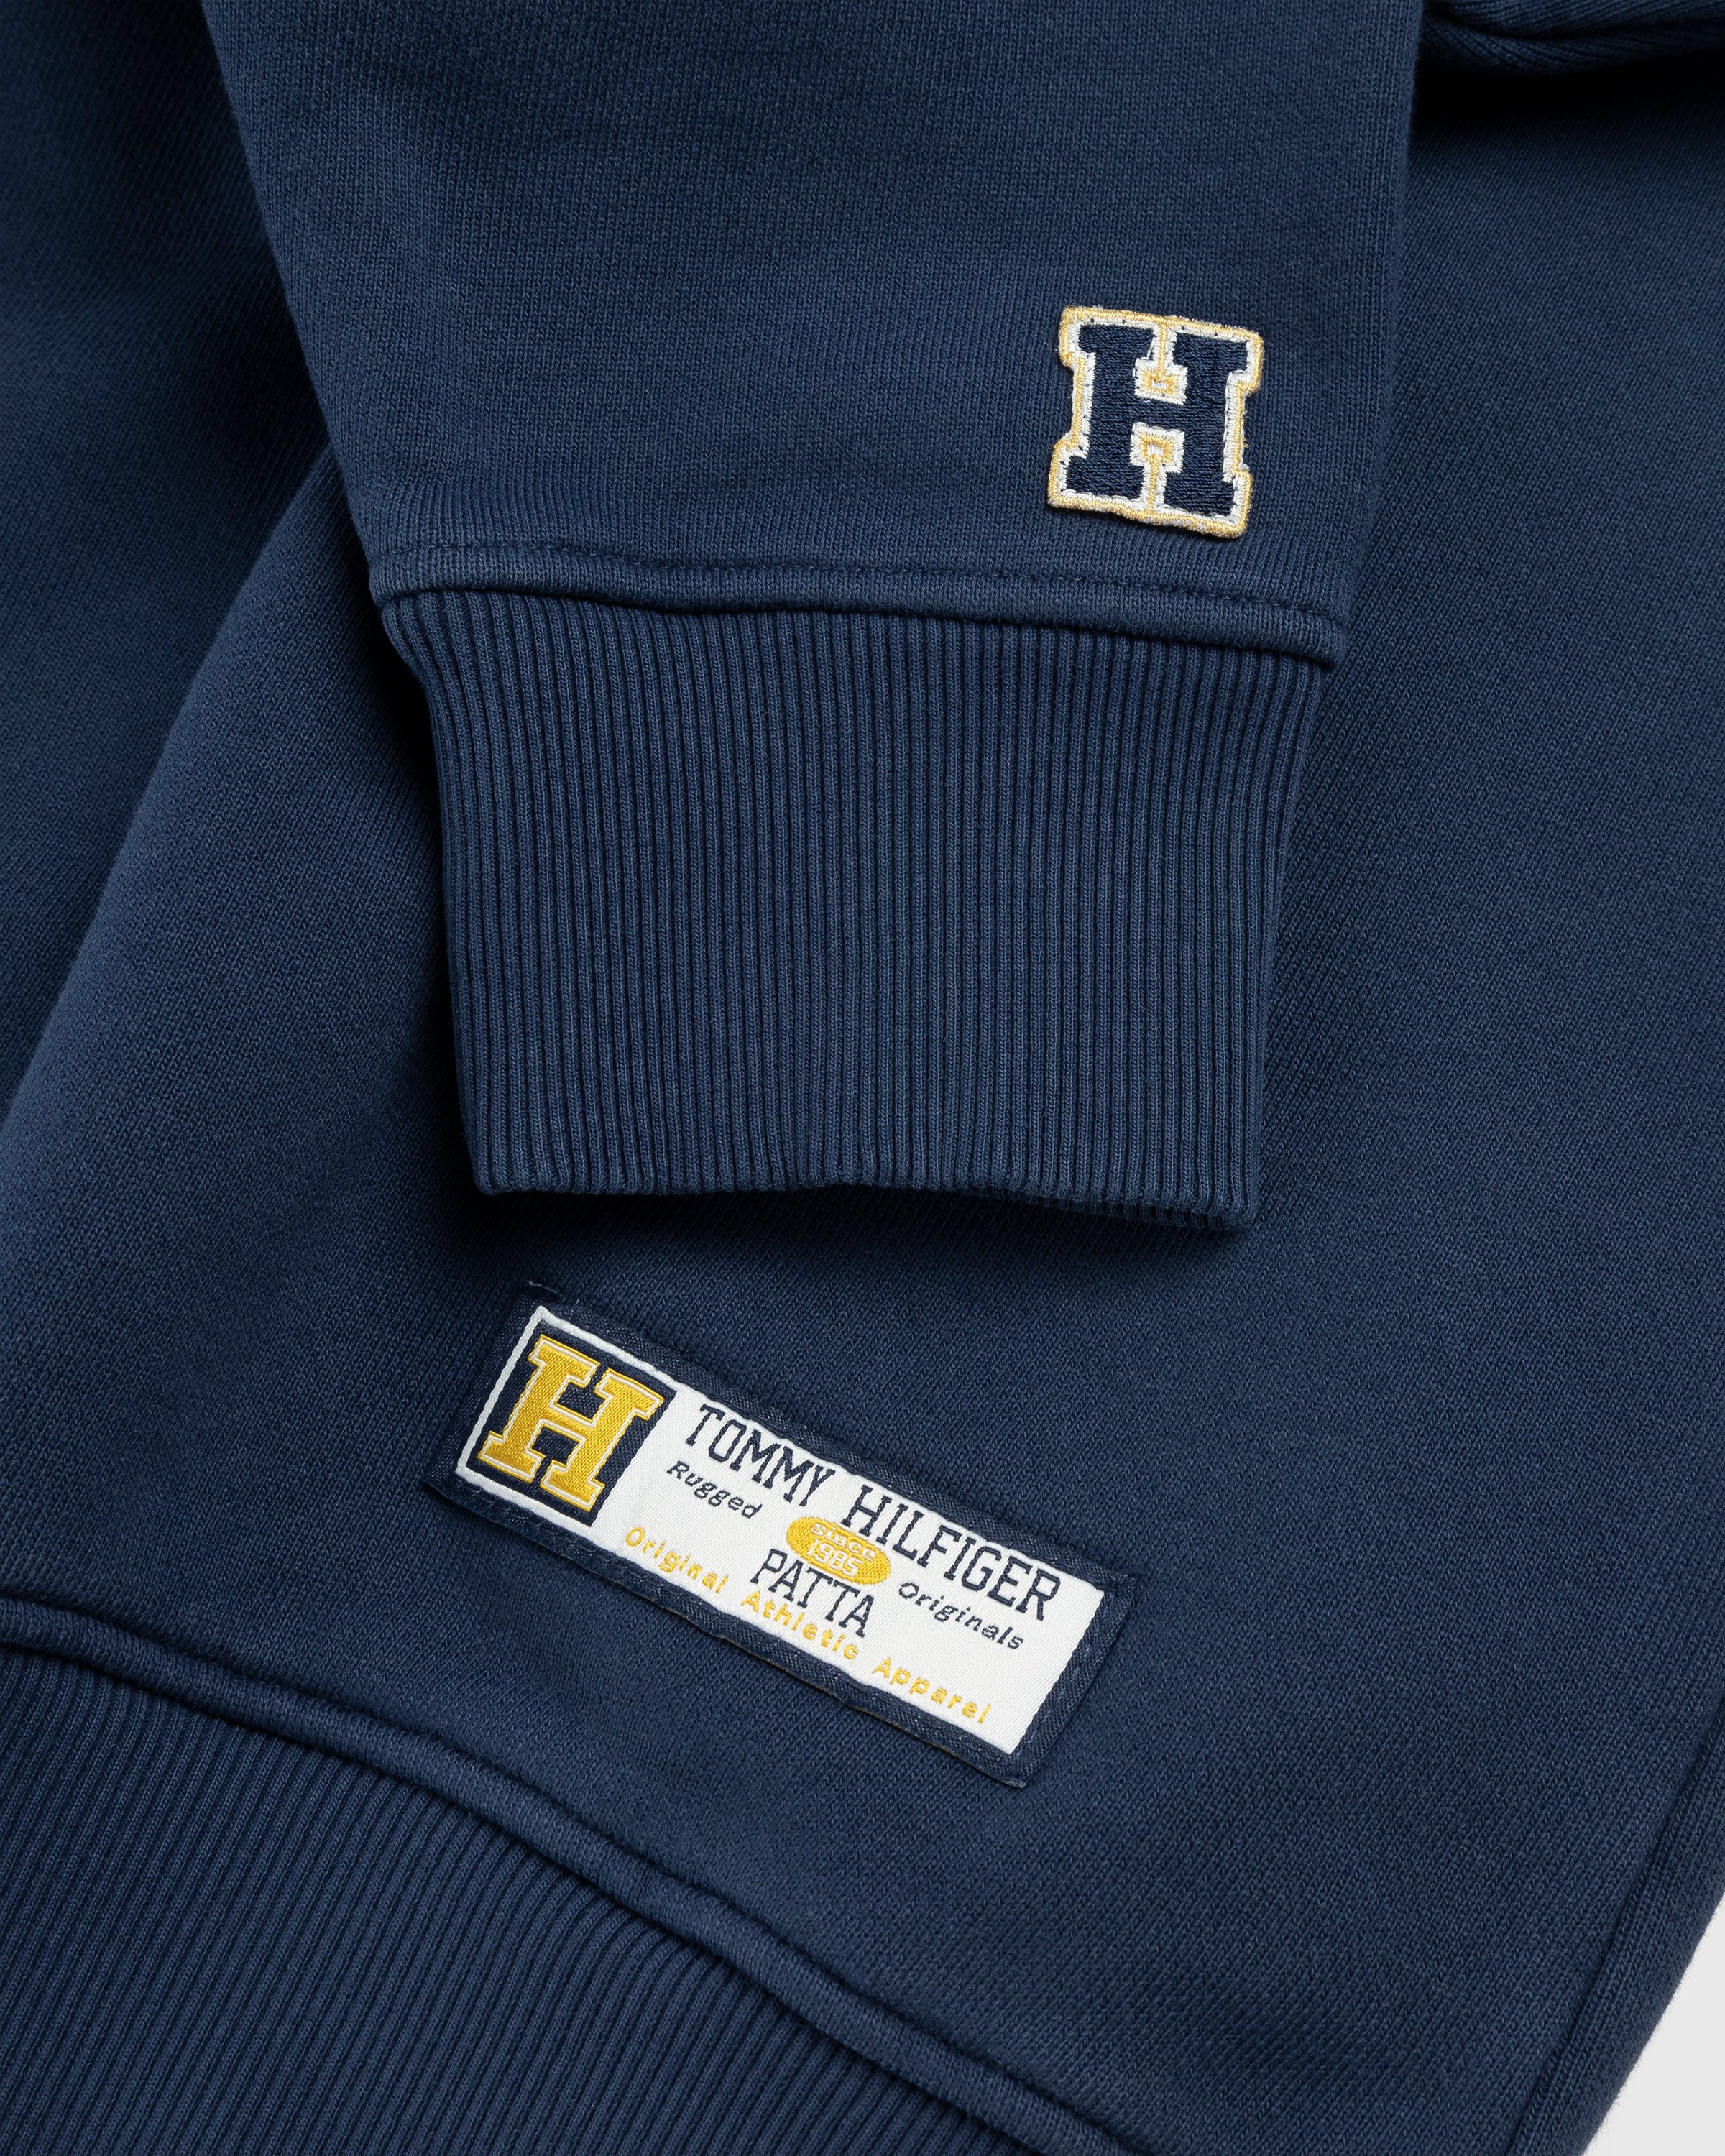 Patta x Tommy Hilfiger - Crewneck Sweatshirt Sport Navy - Clothing - Blue - Image 5